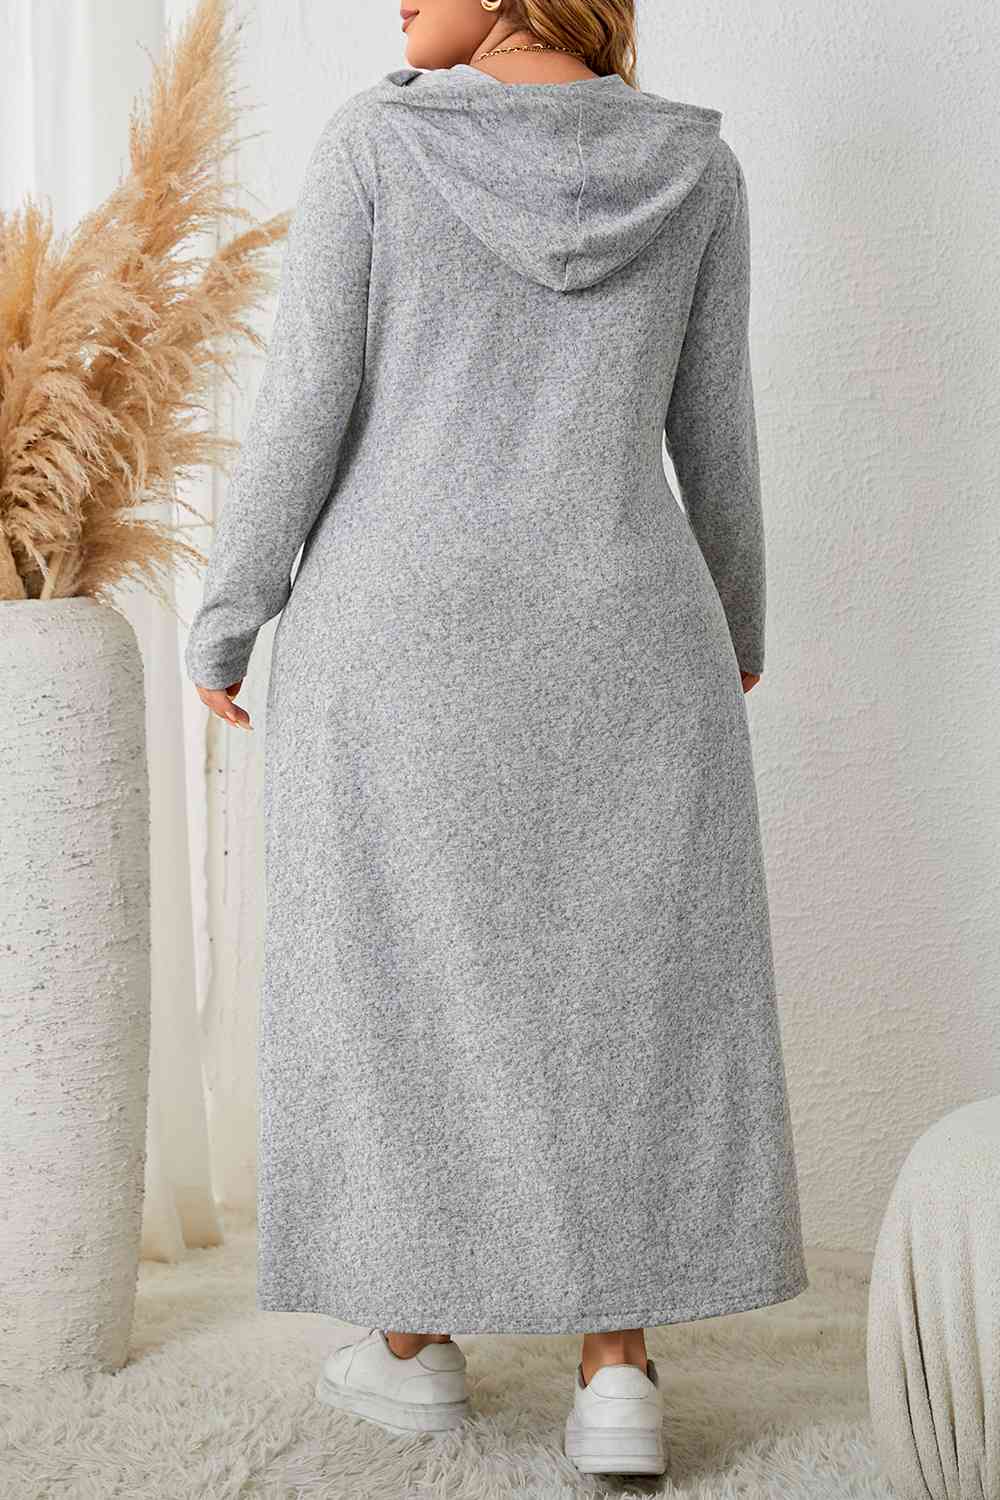 TEEK - Heather Grey Plus Size Long Sleeve Hooded Dress DRESS TEEK Trend   